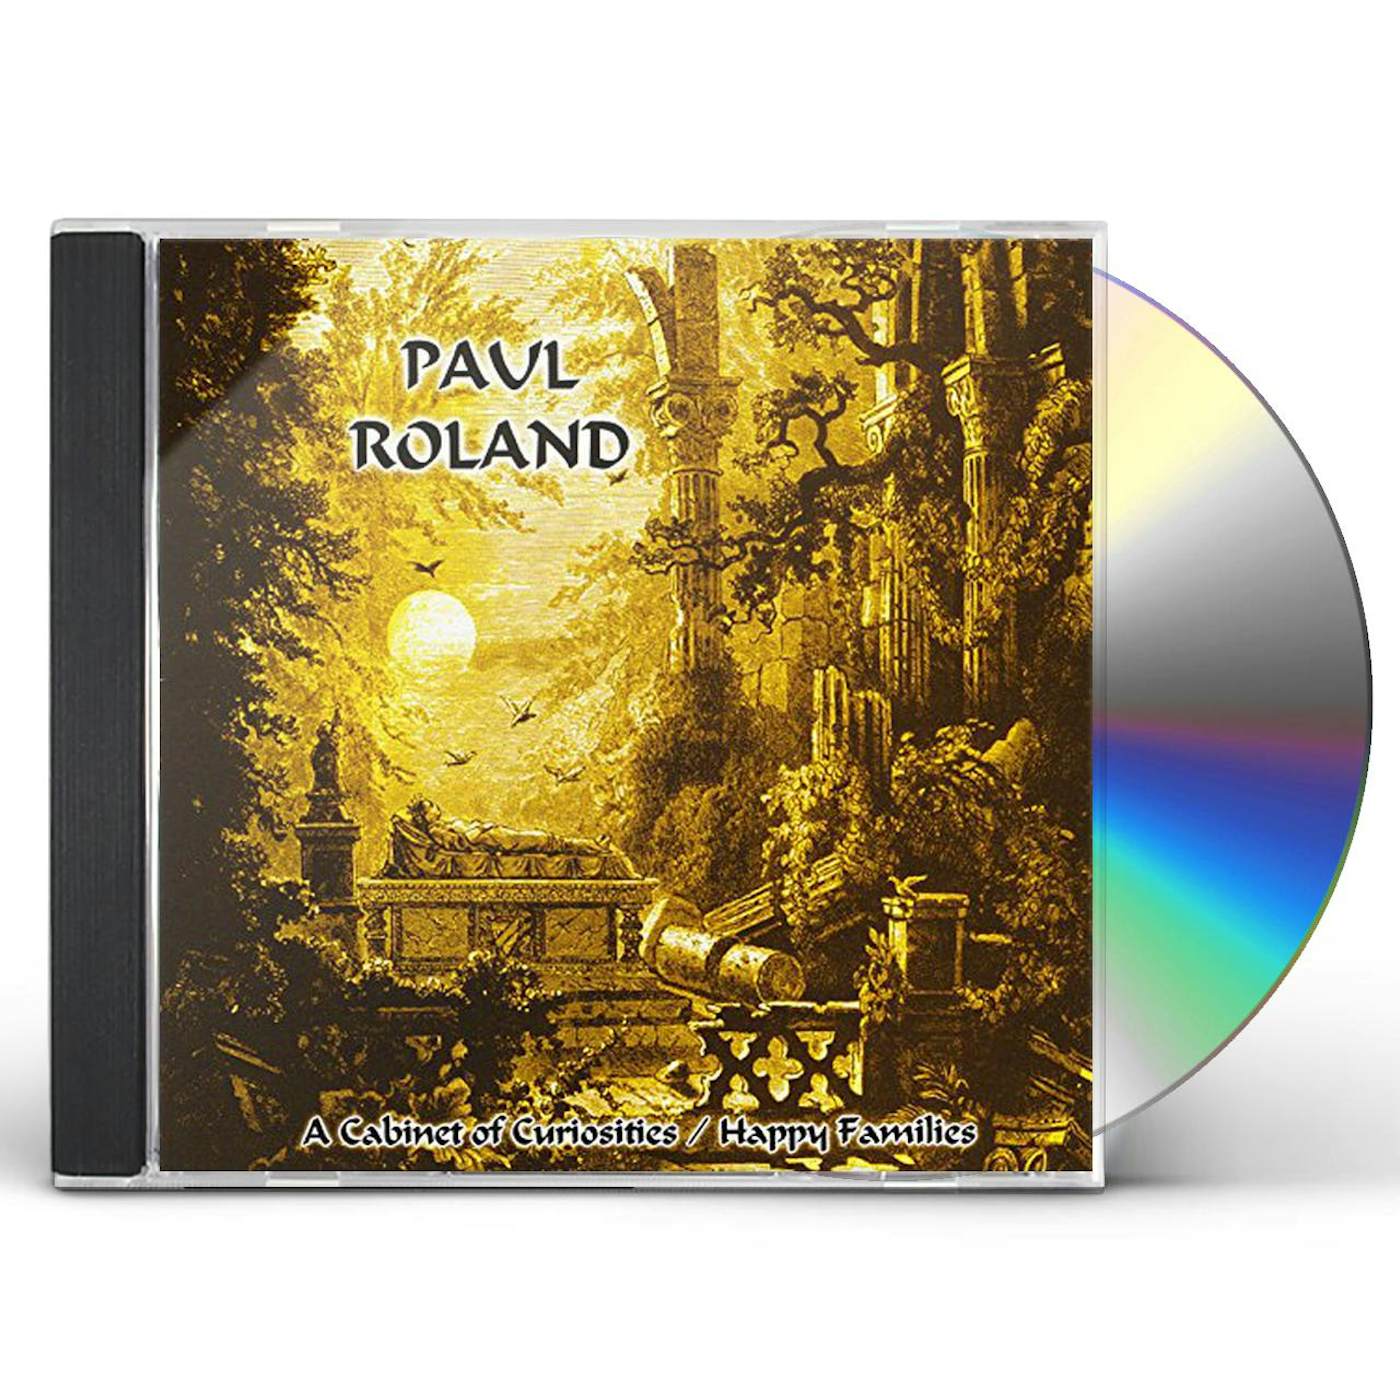 Paul Roland CABINET OF CURIOSITIES / HAPPY FAMILIES CD